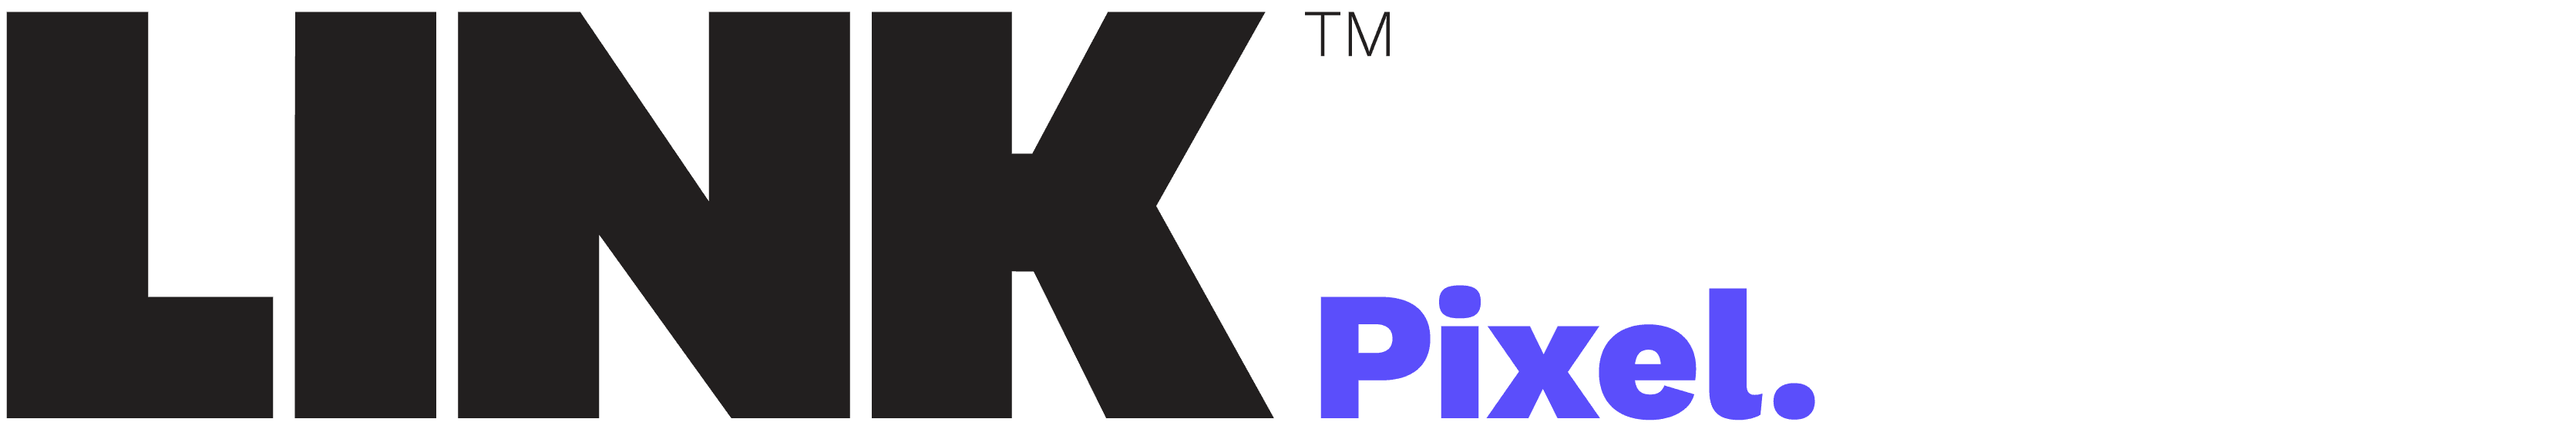 Link Logo_Link Pixel - Fixed